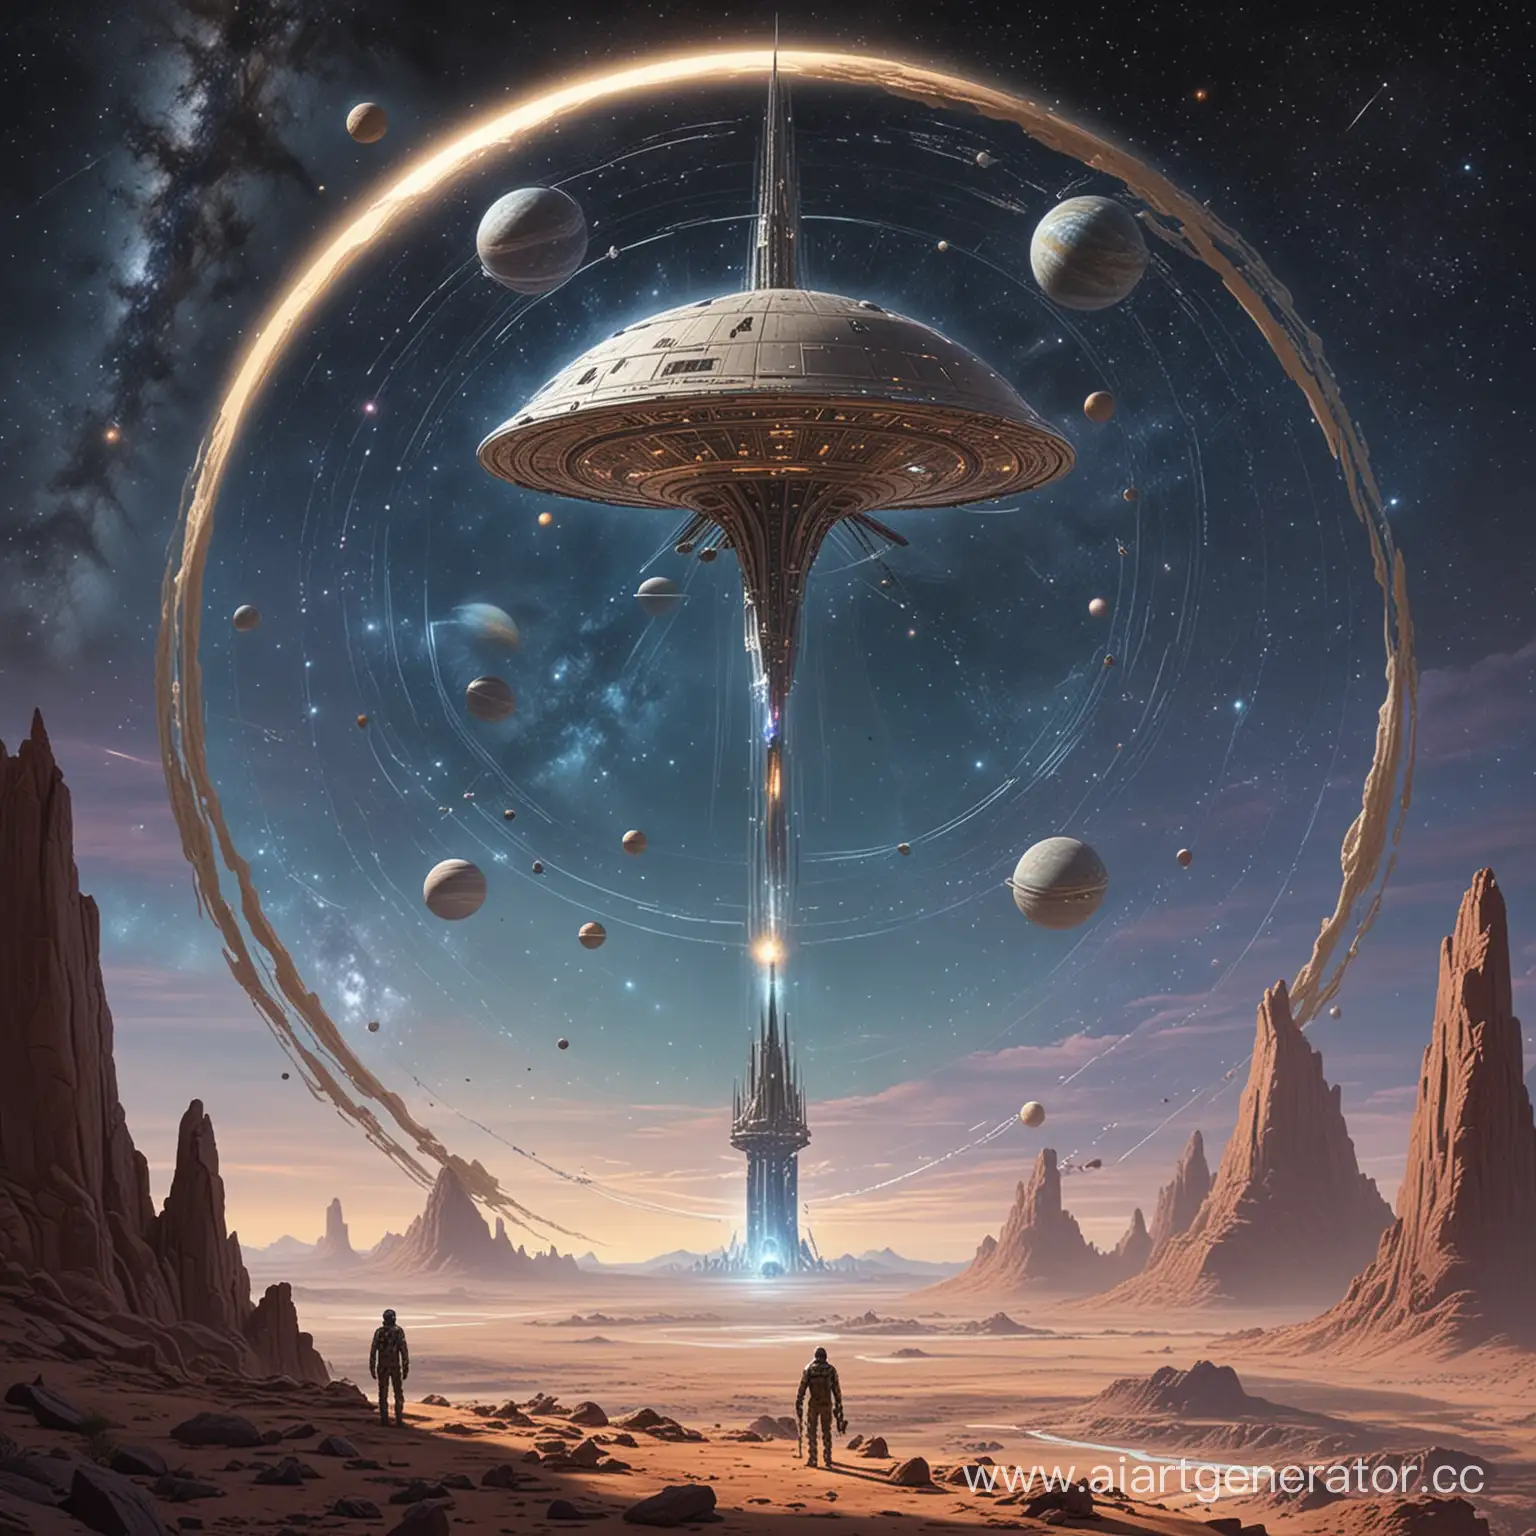 Intergalactic-Collaboration-Space-Civilization-and-Alien-Species-Building-a-Cosmic-Gateway